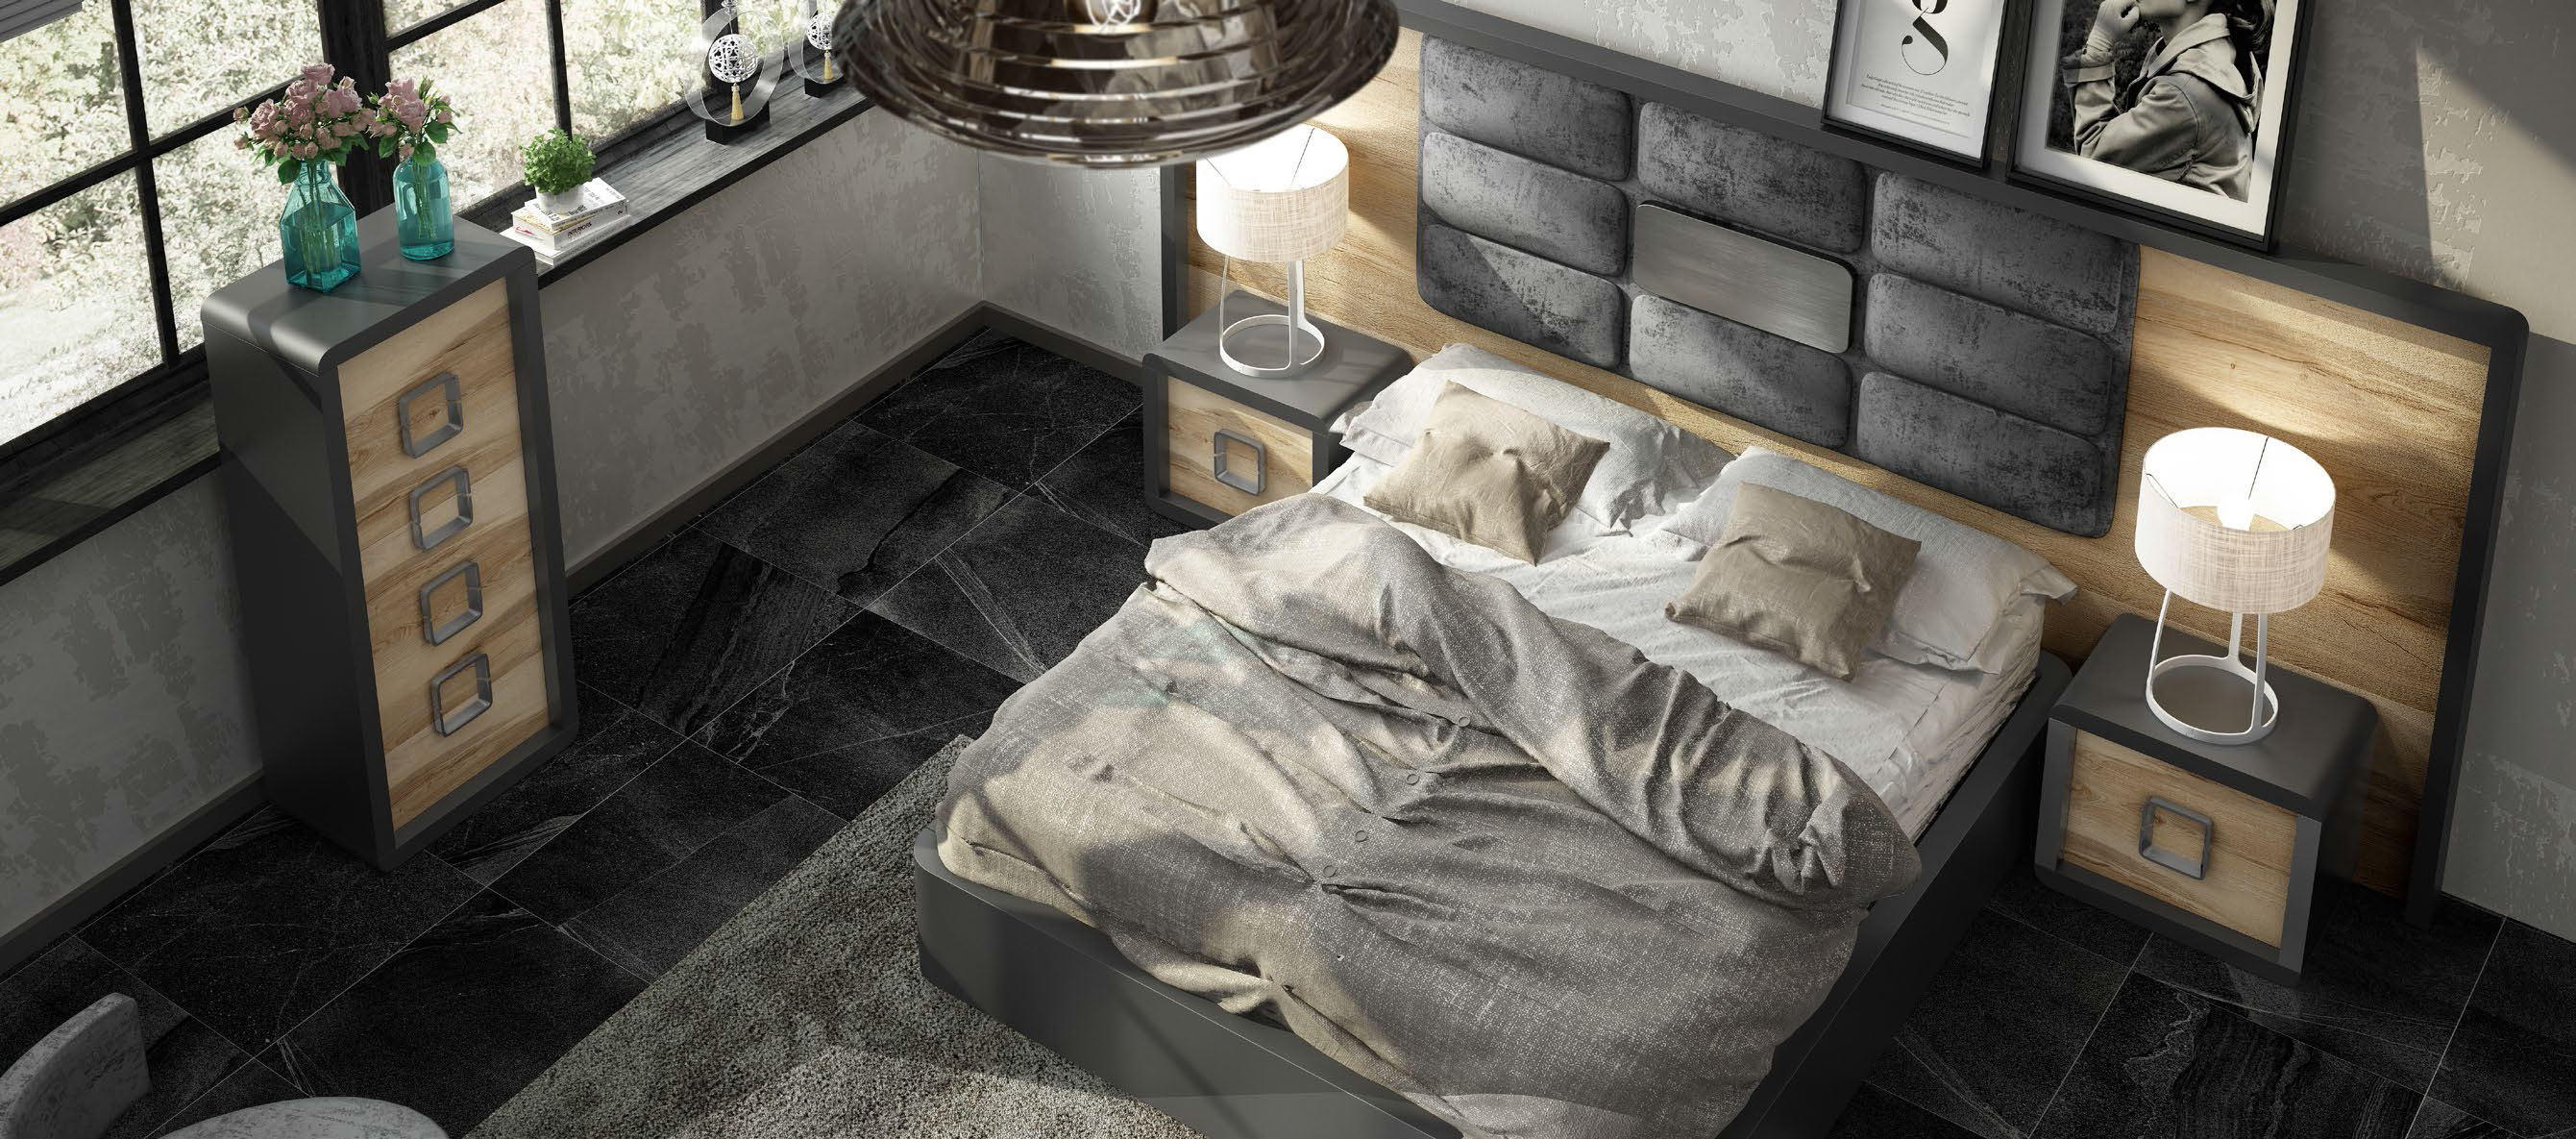 Brands Franco Furniture Bedrooms vol1, Spain DOR 173